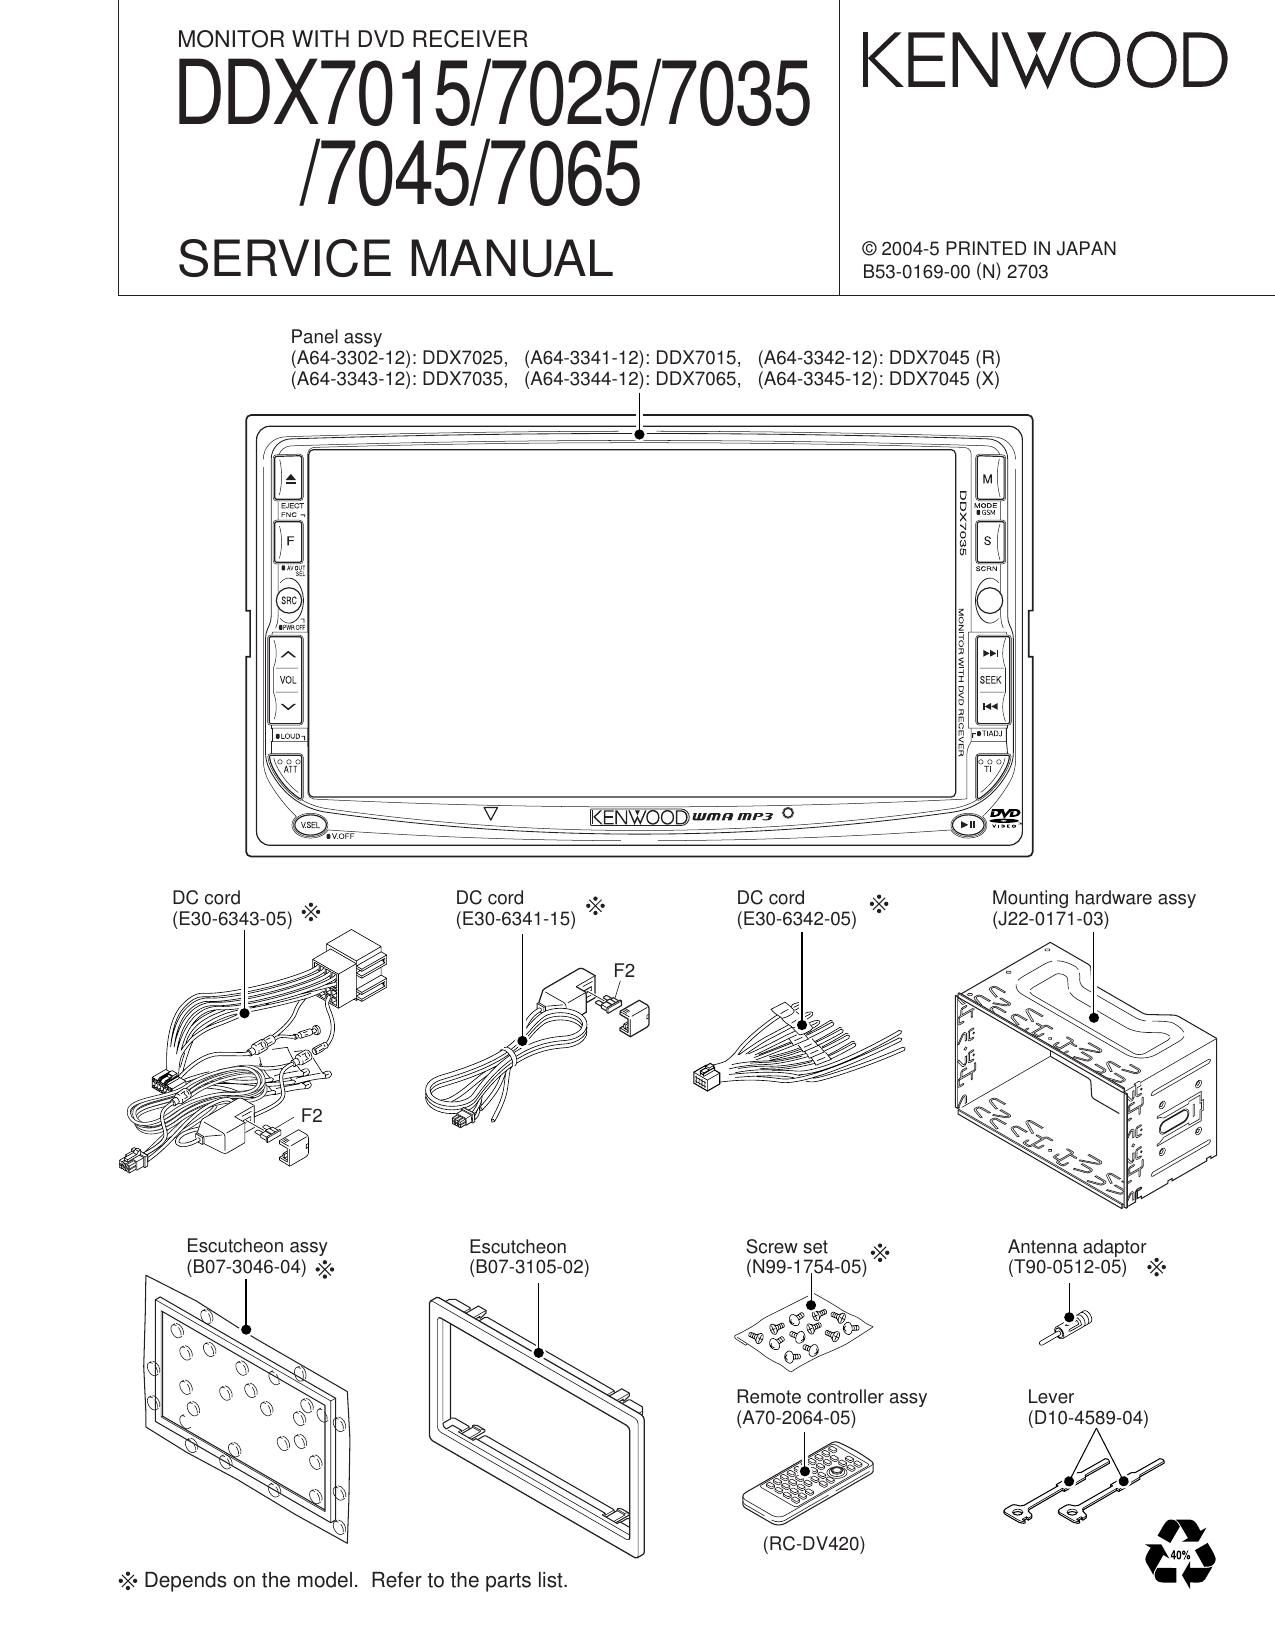 Kenwood DDX 7015 HU Service Manual